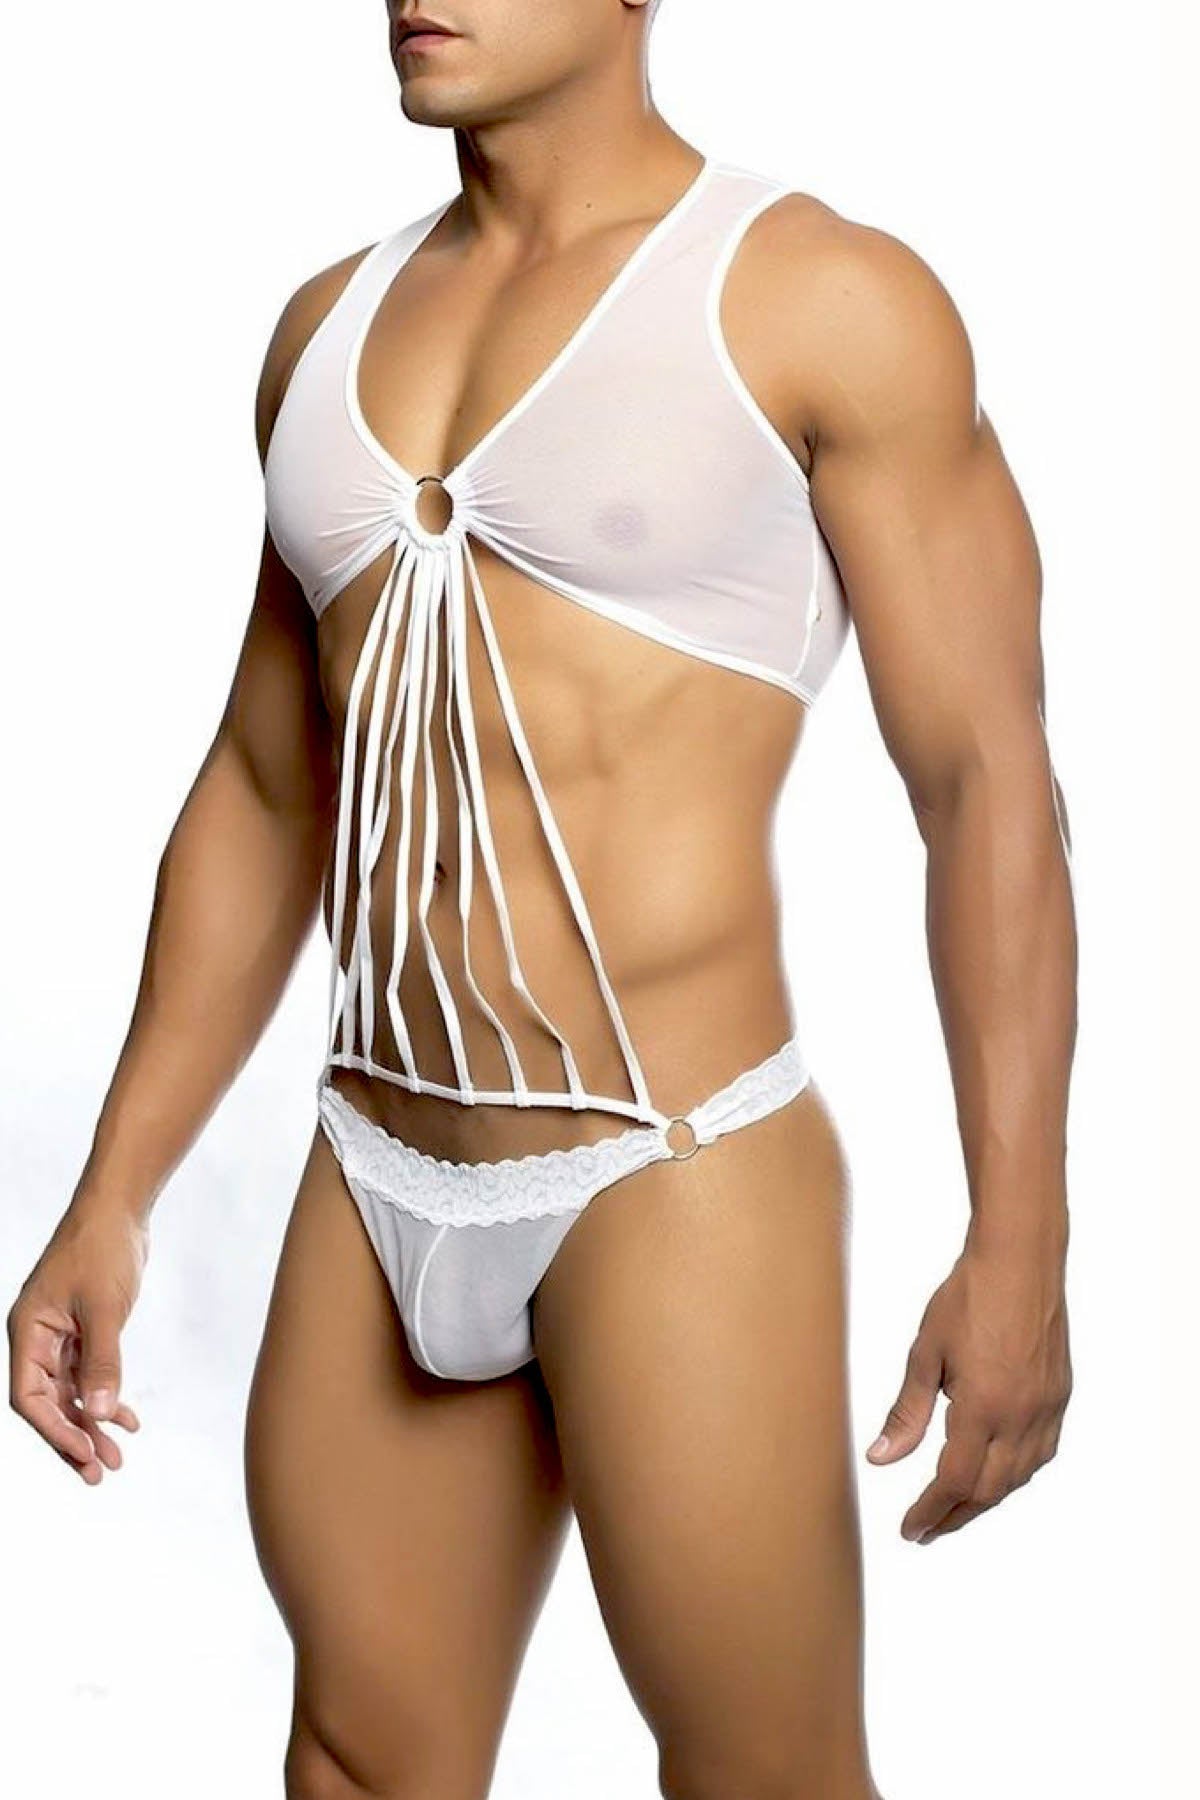 Male Basics White Tie-Me-Up Thong Bodysuit